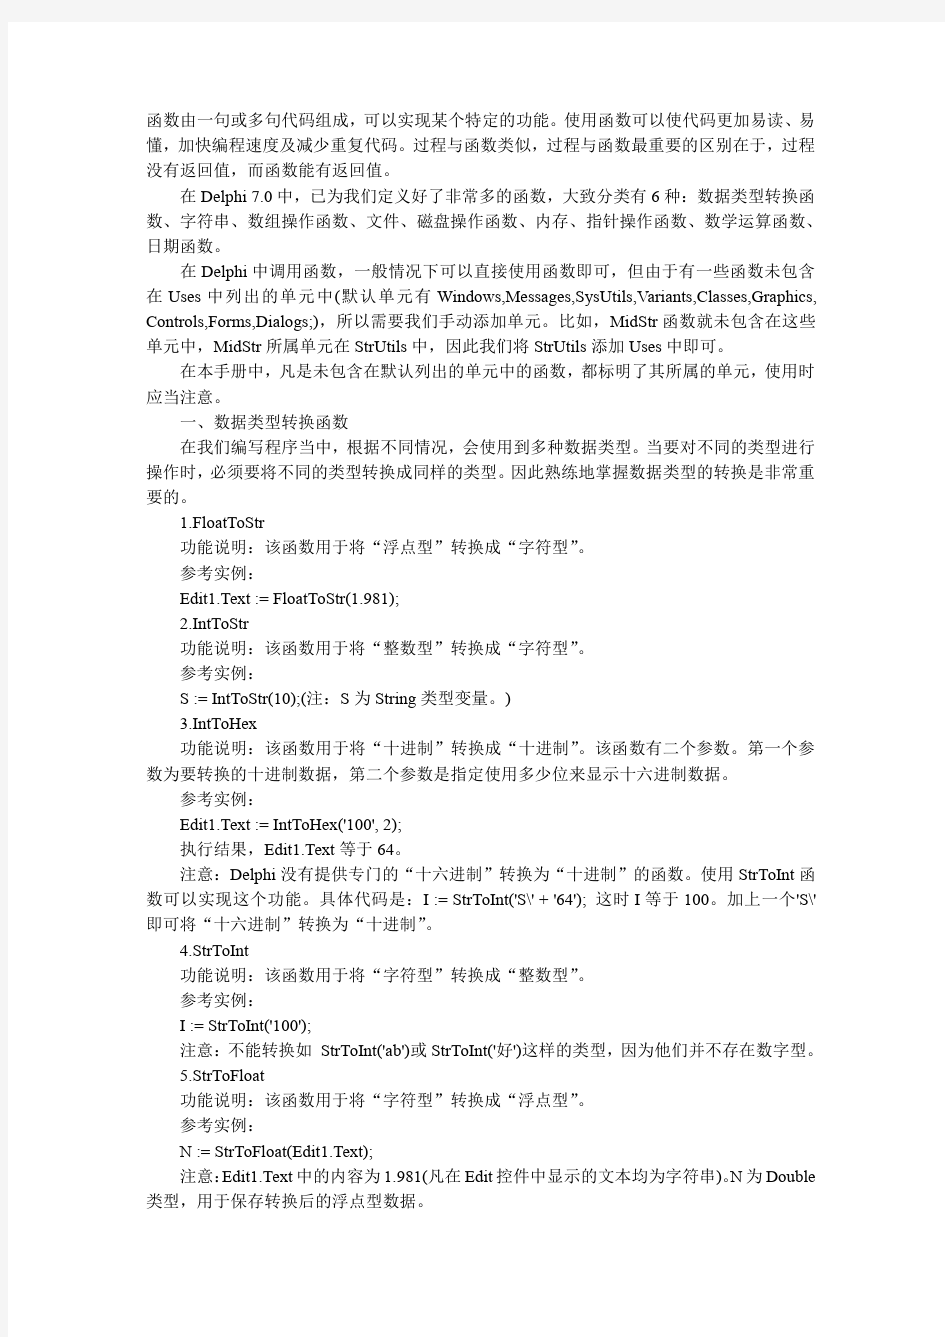 DELPHI完整中文函数手册